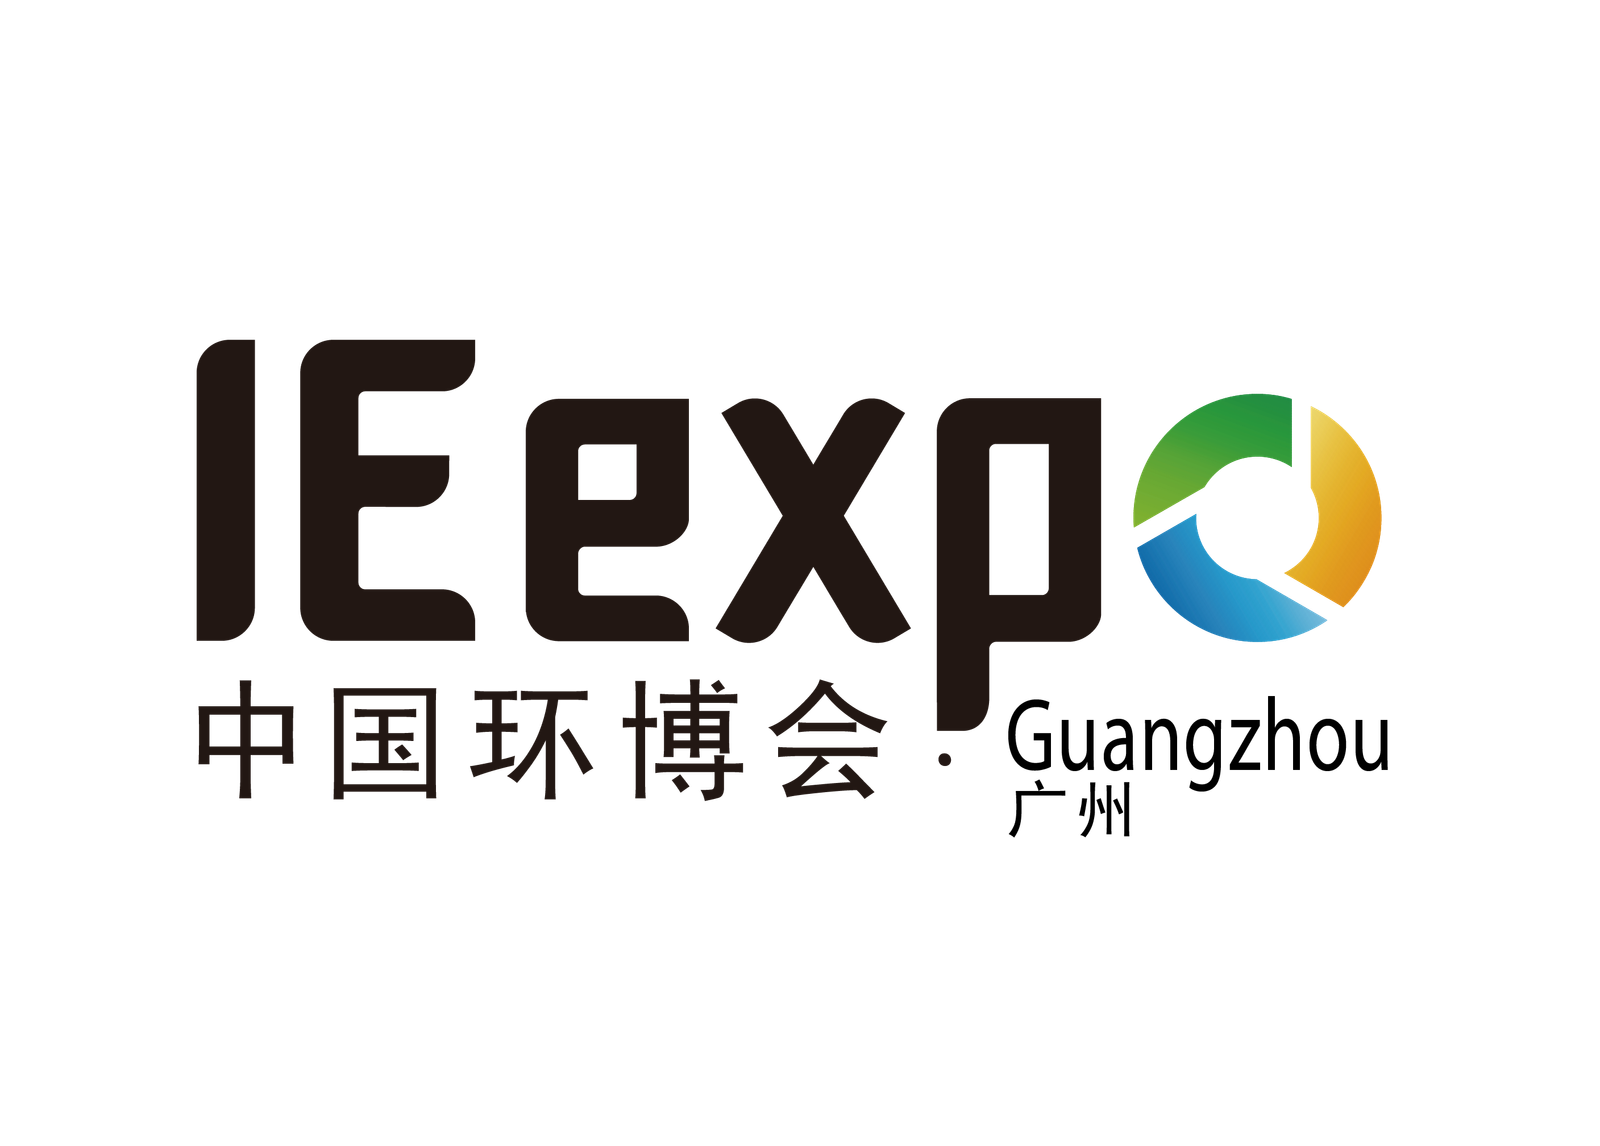 ieexpo logo